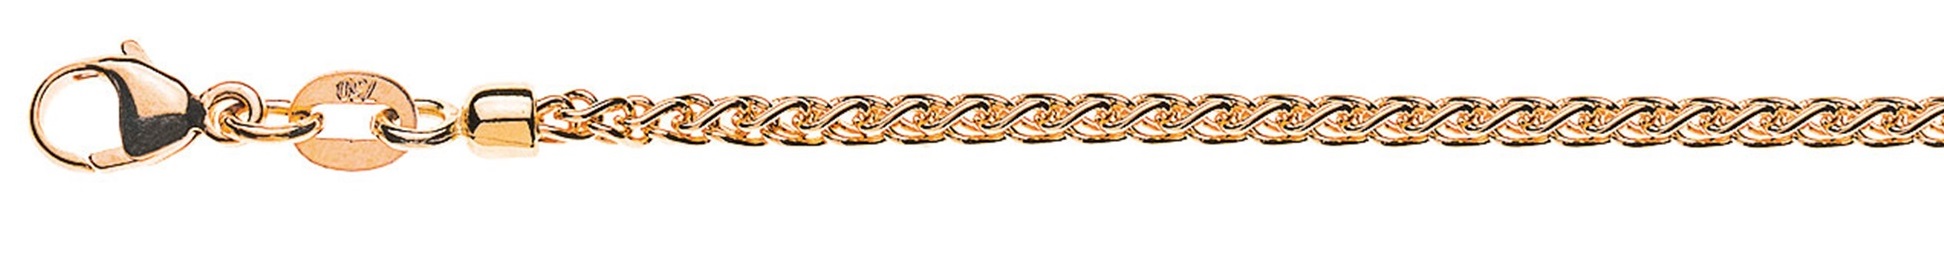 AURONOS Prestige Collier chaîne en or rose 18K 42cm 2.15mm